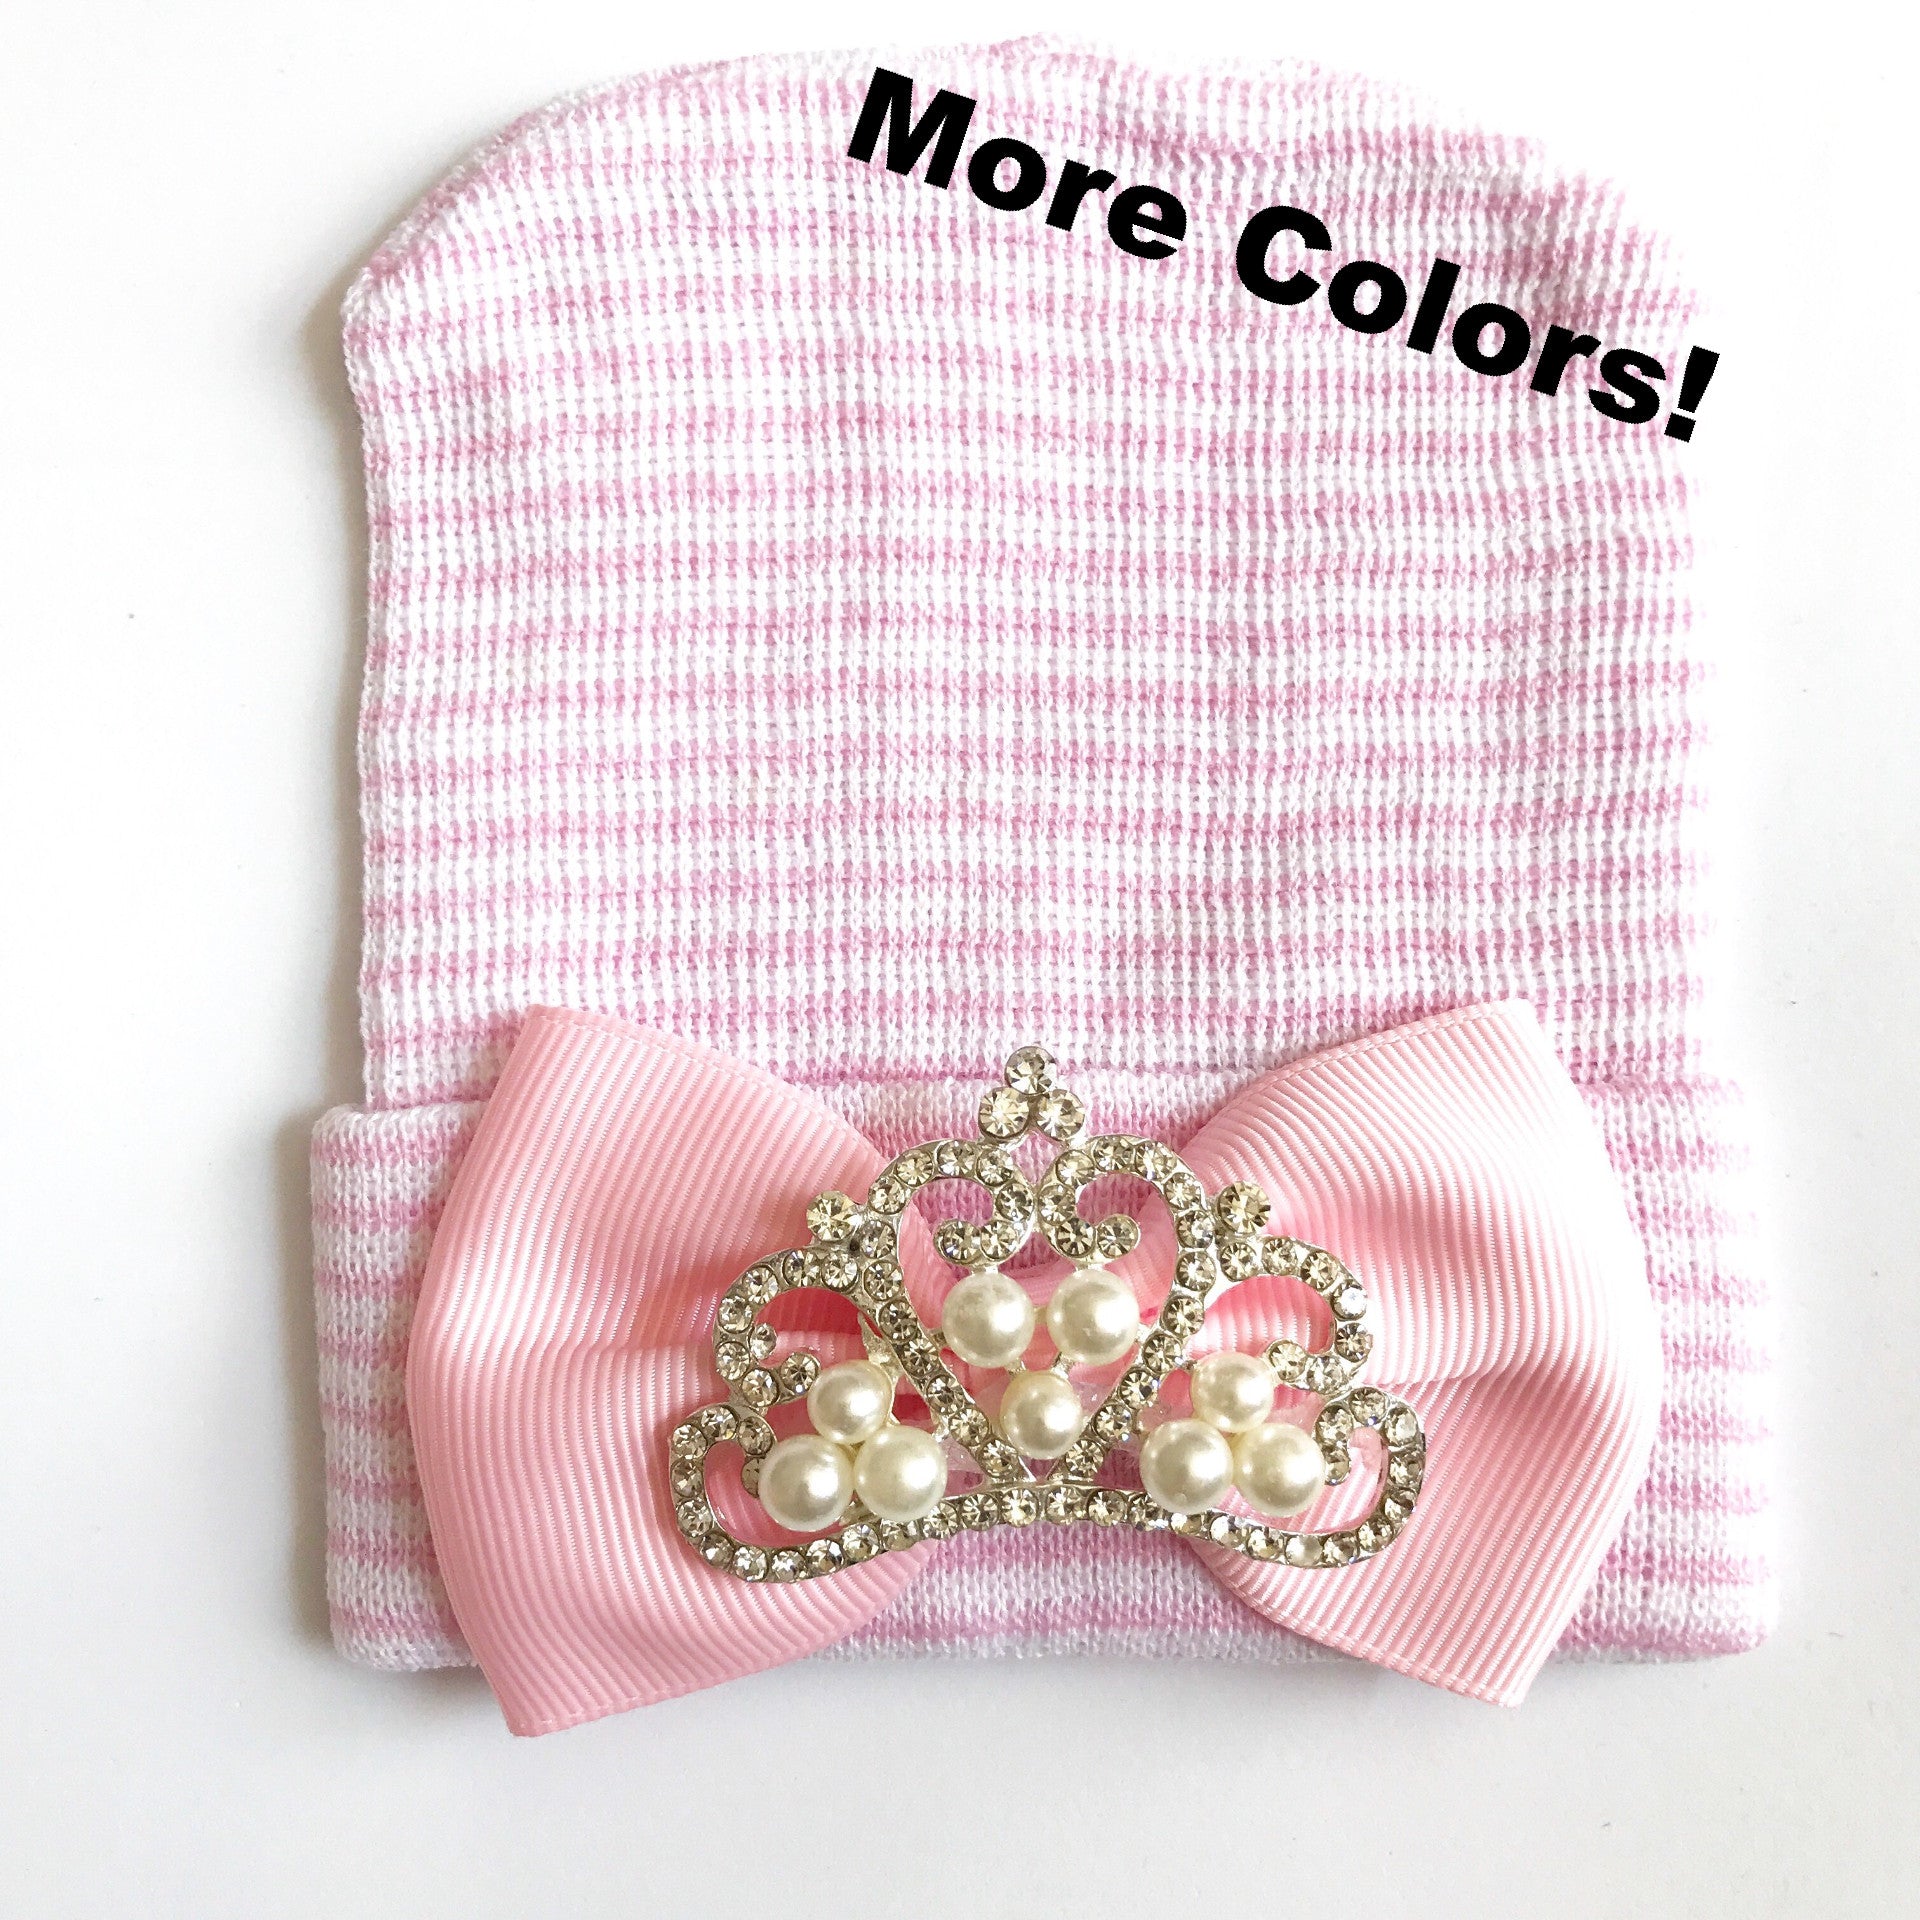 Princess hat-pick your color bow!